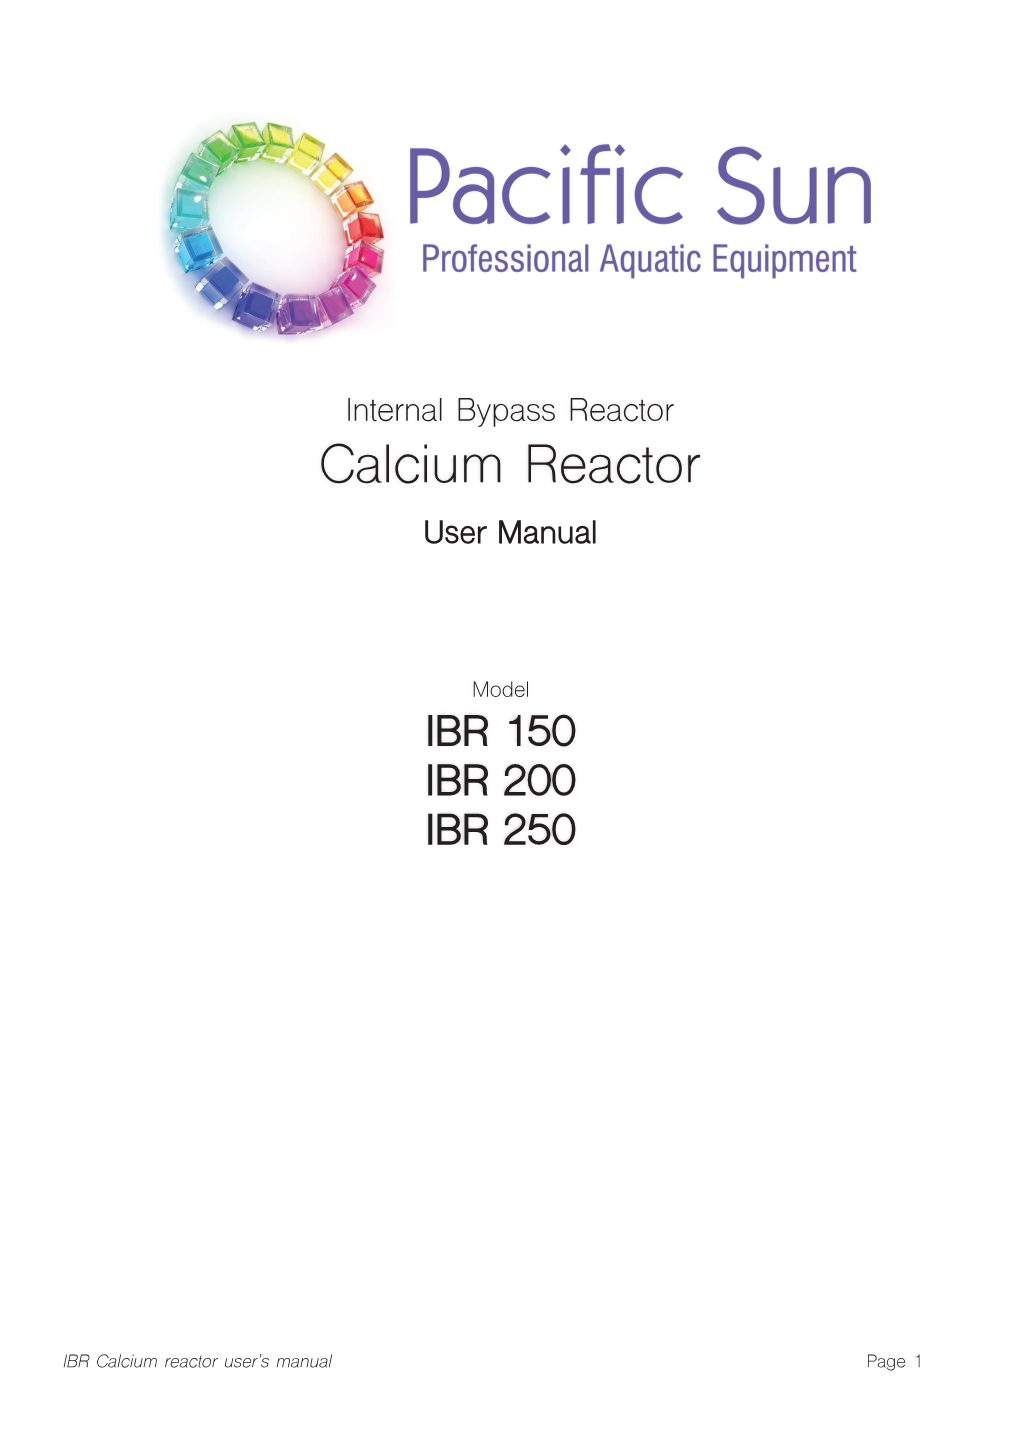 Calcium Reactor User Manual